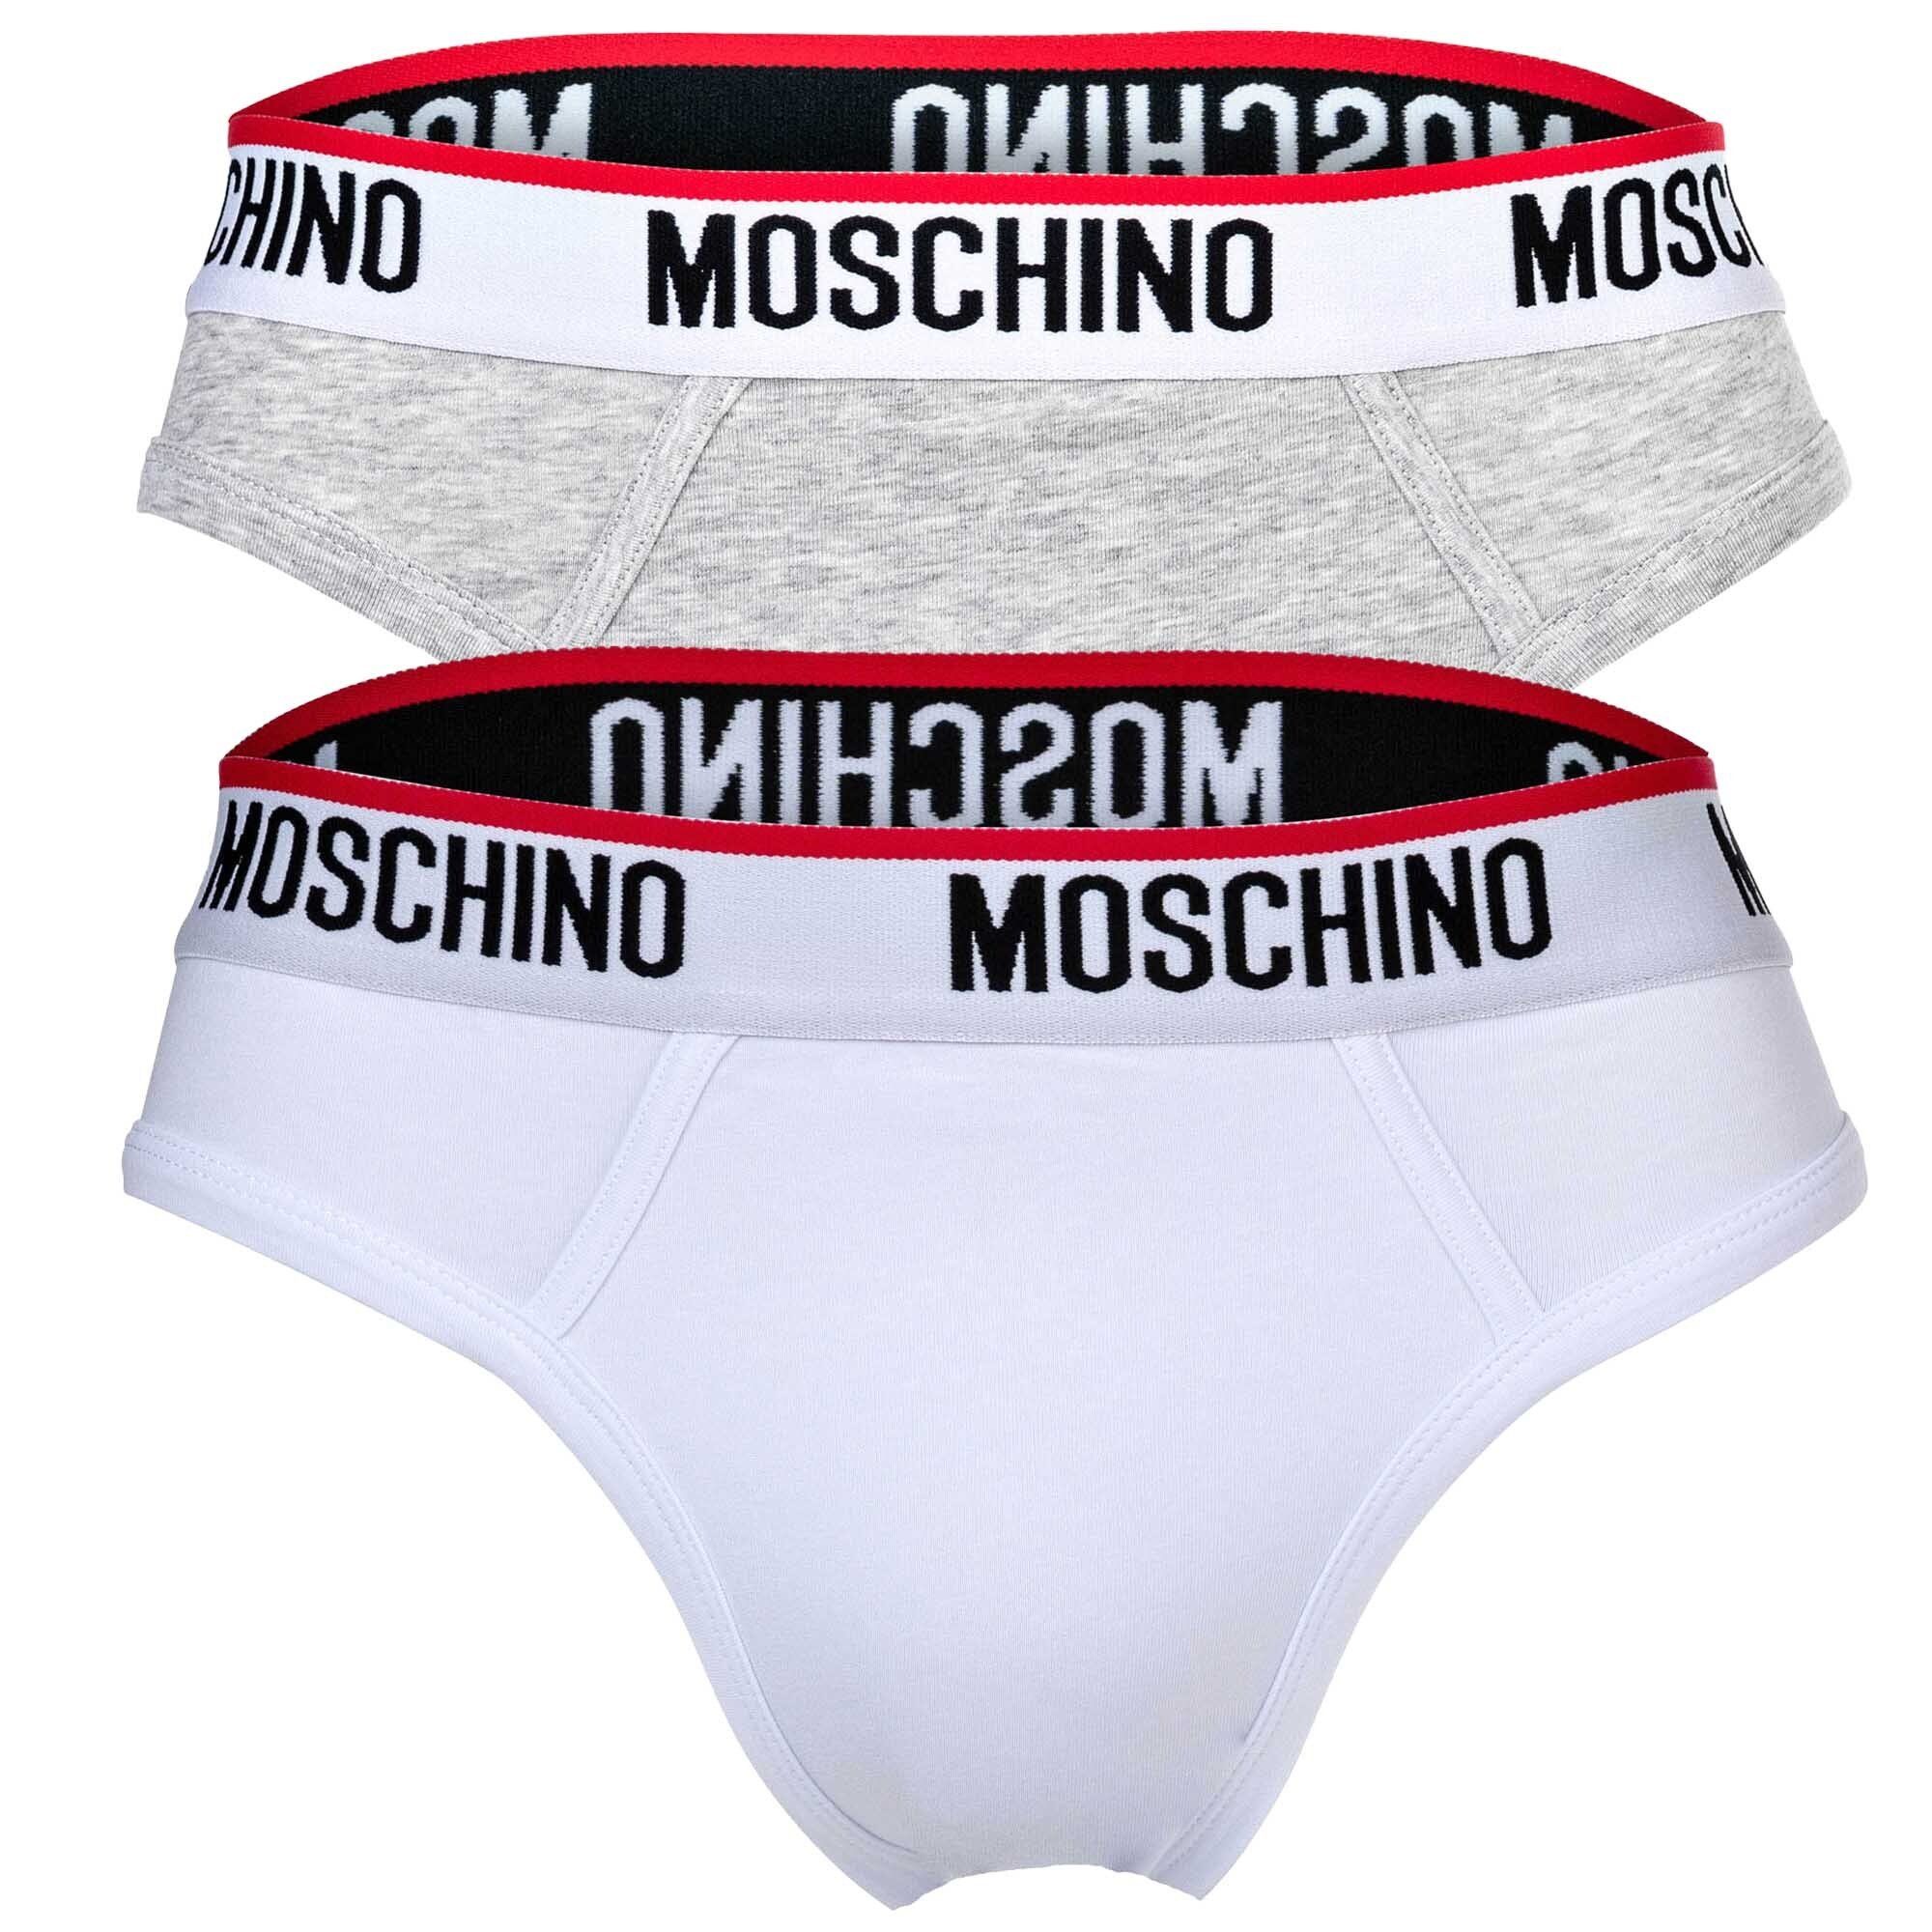 2er Moschino Herren Unterhose Slip Slips Pack Grau/Weiß Micro -